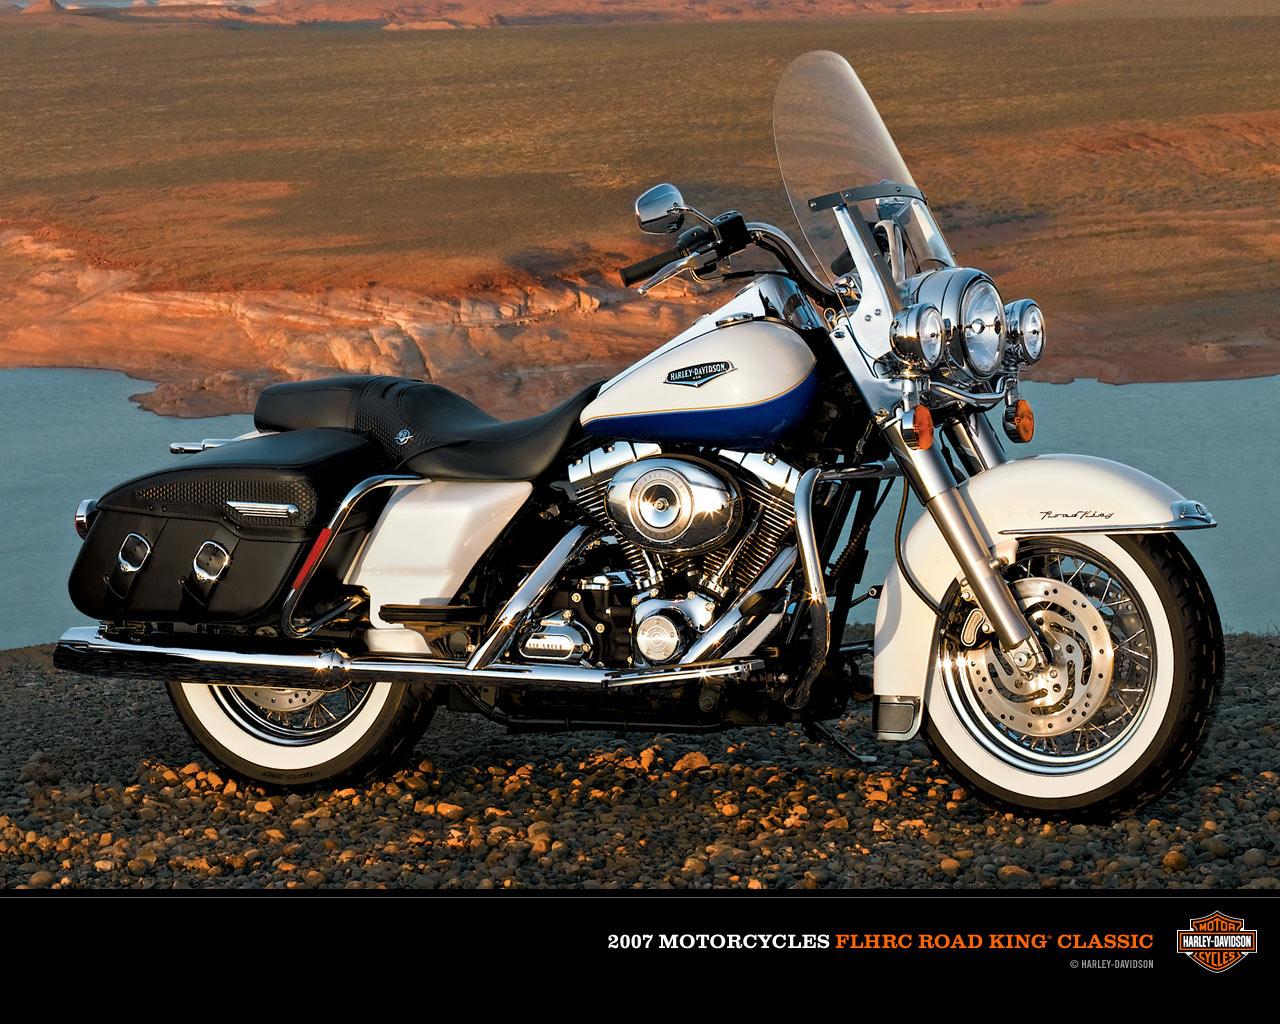 Harley Davidson Motorcycleclass=Harley Davidson Motorcycle